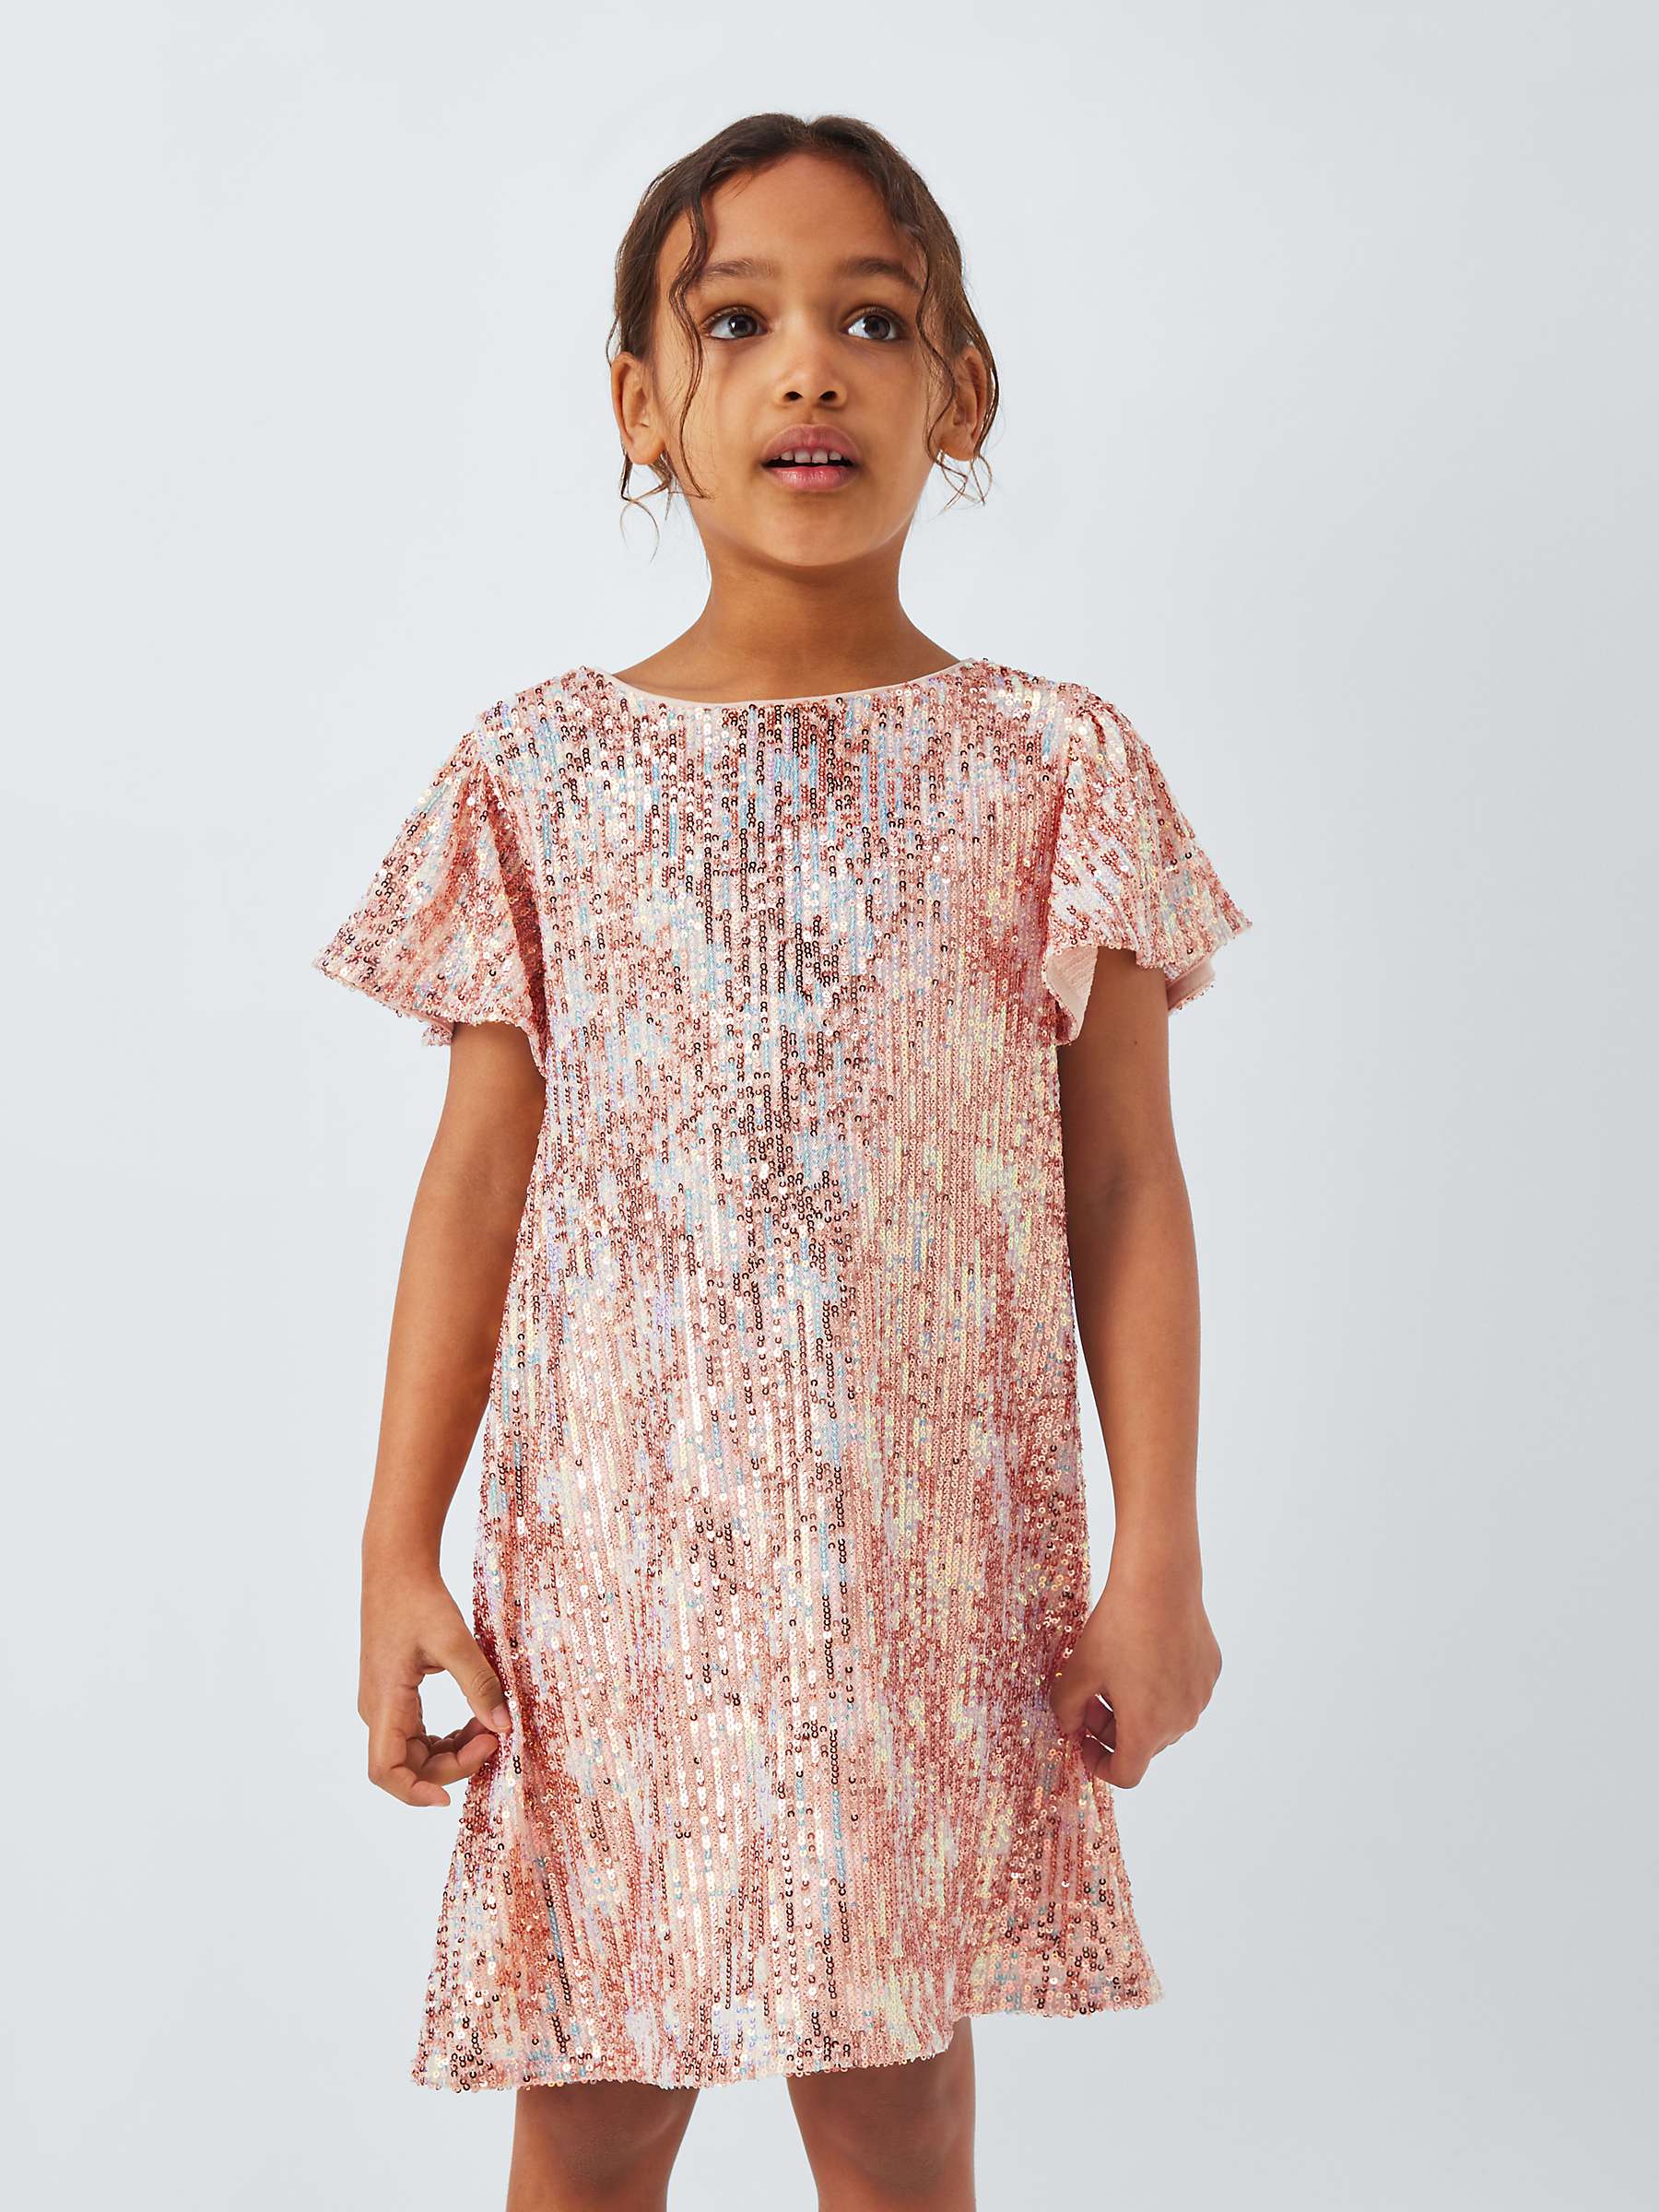 Buy John Lewis Kids' Sequin Party Dress, Rose Gold/Multi Online at johnlewis.com